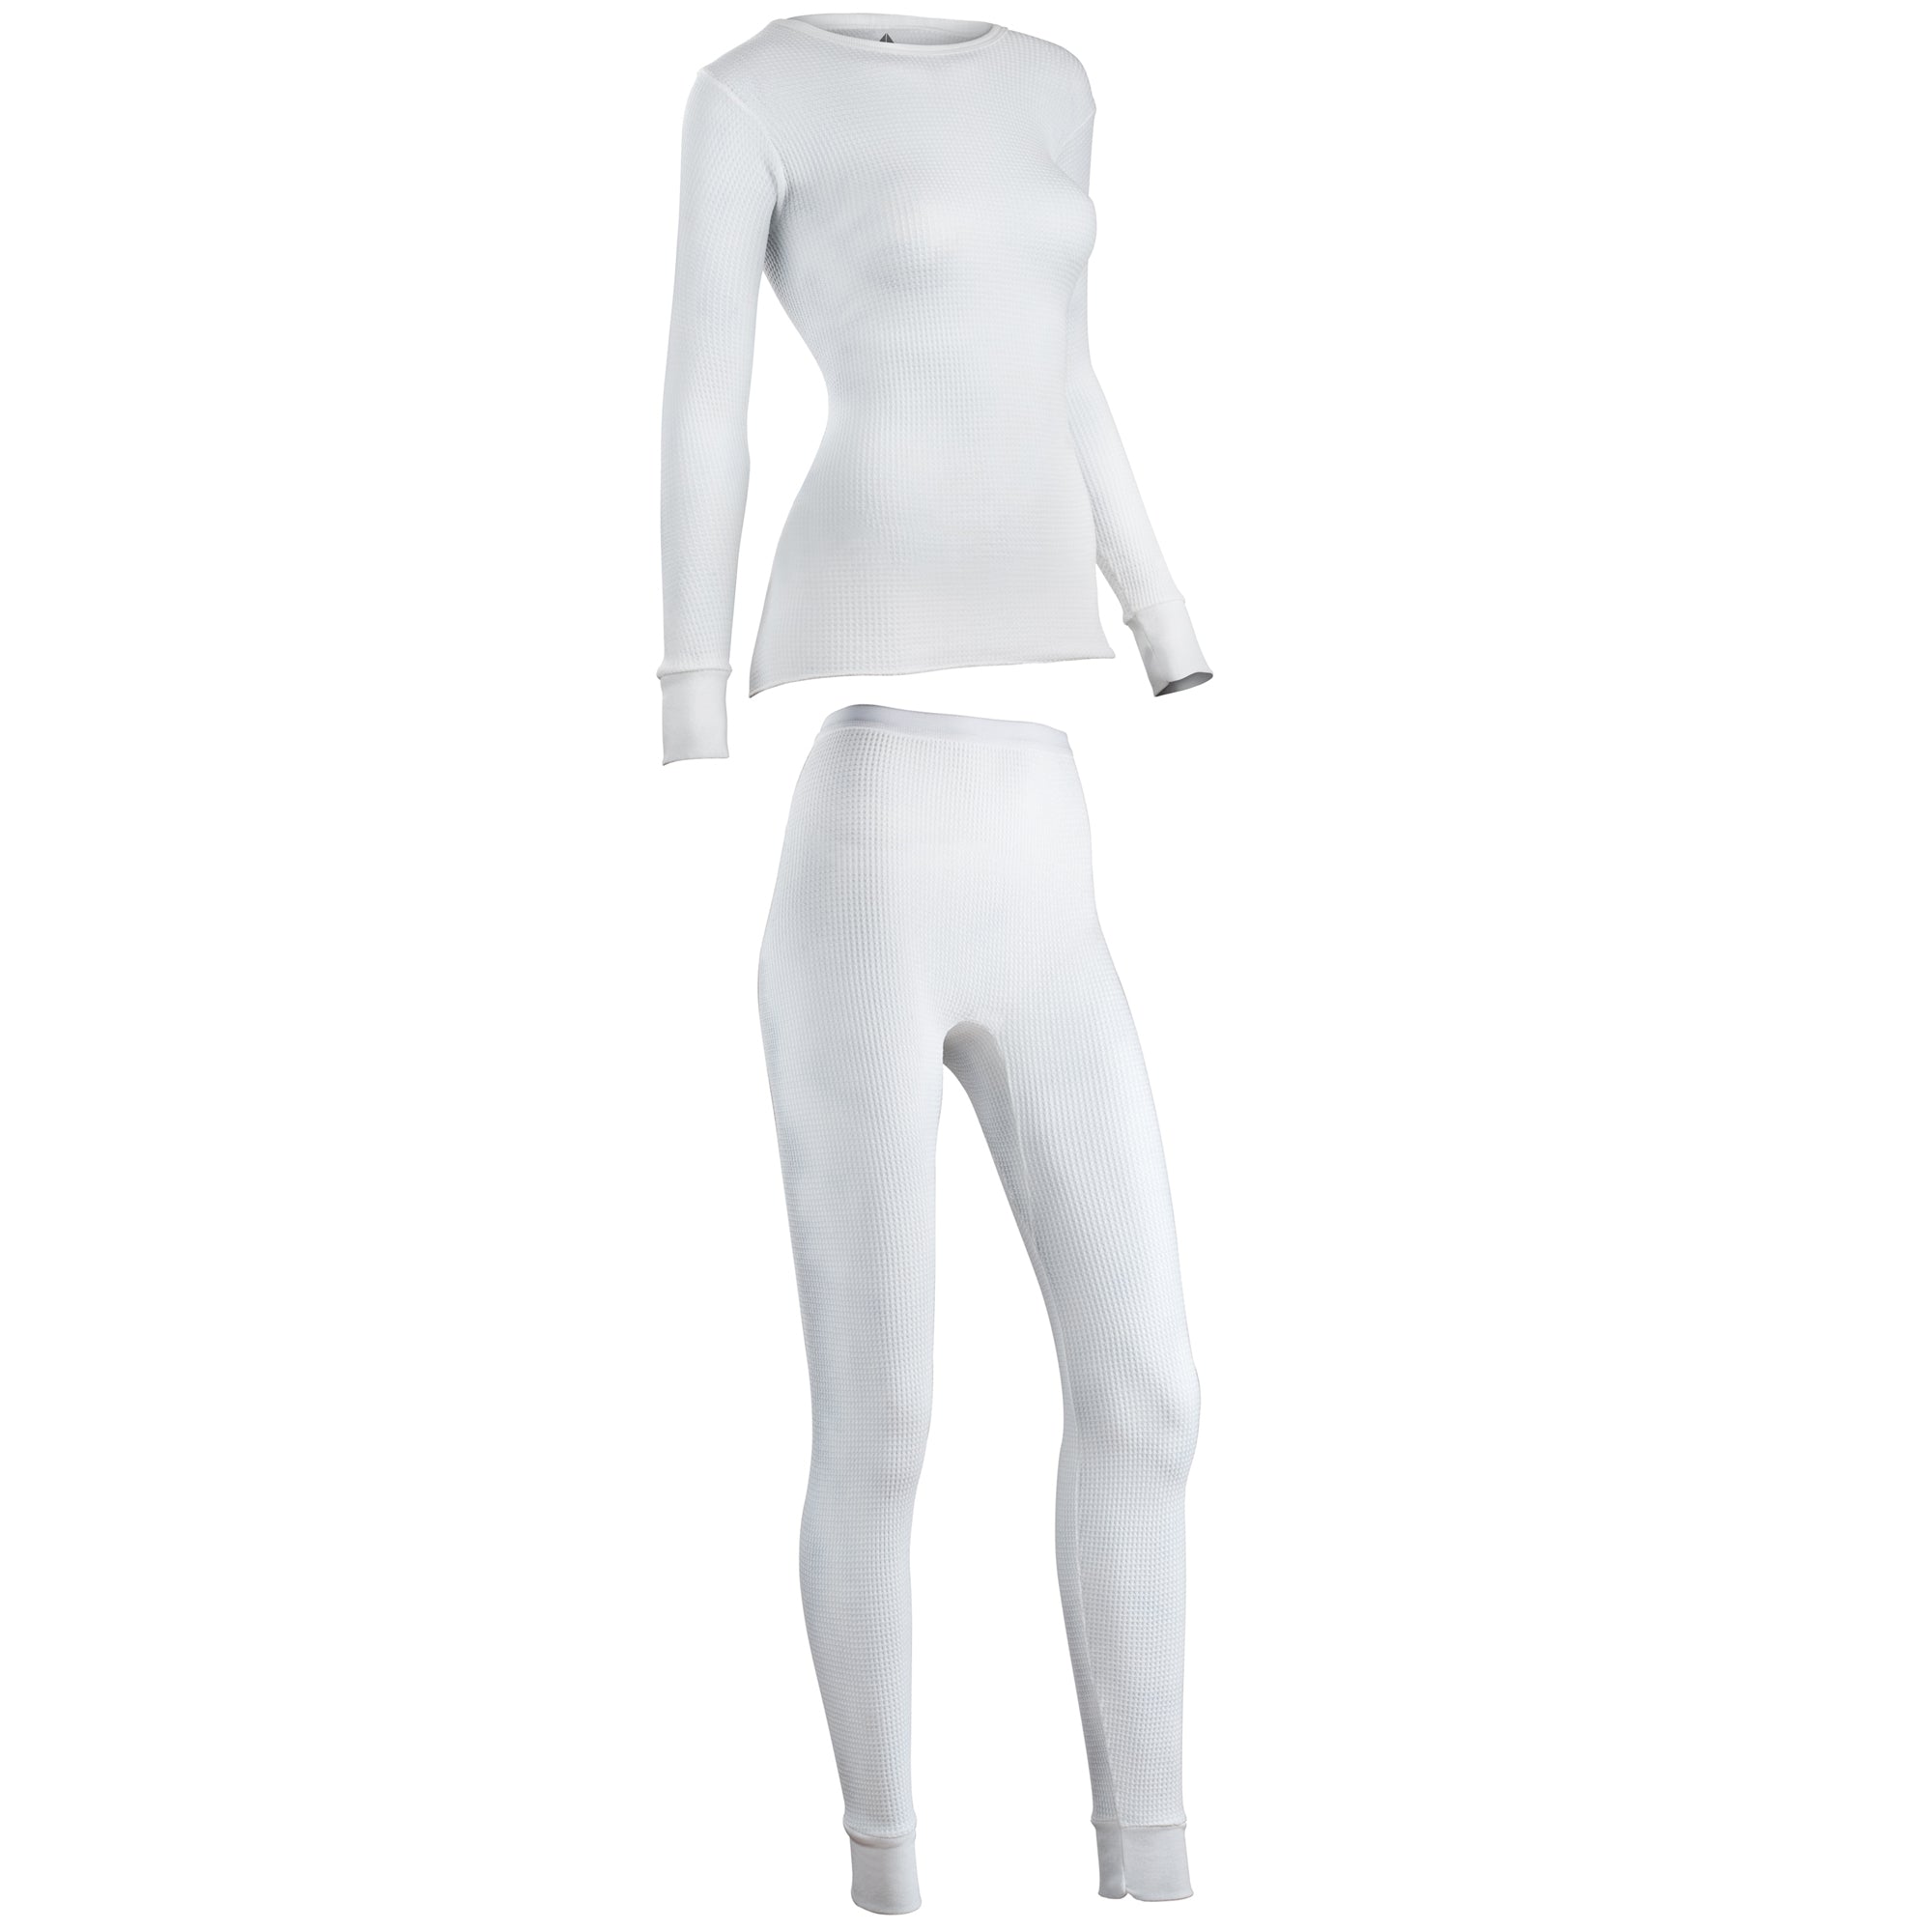 Girls Thermal Underwear Set for Kids Long Johns Underwear Ultra X-Small  White